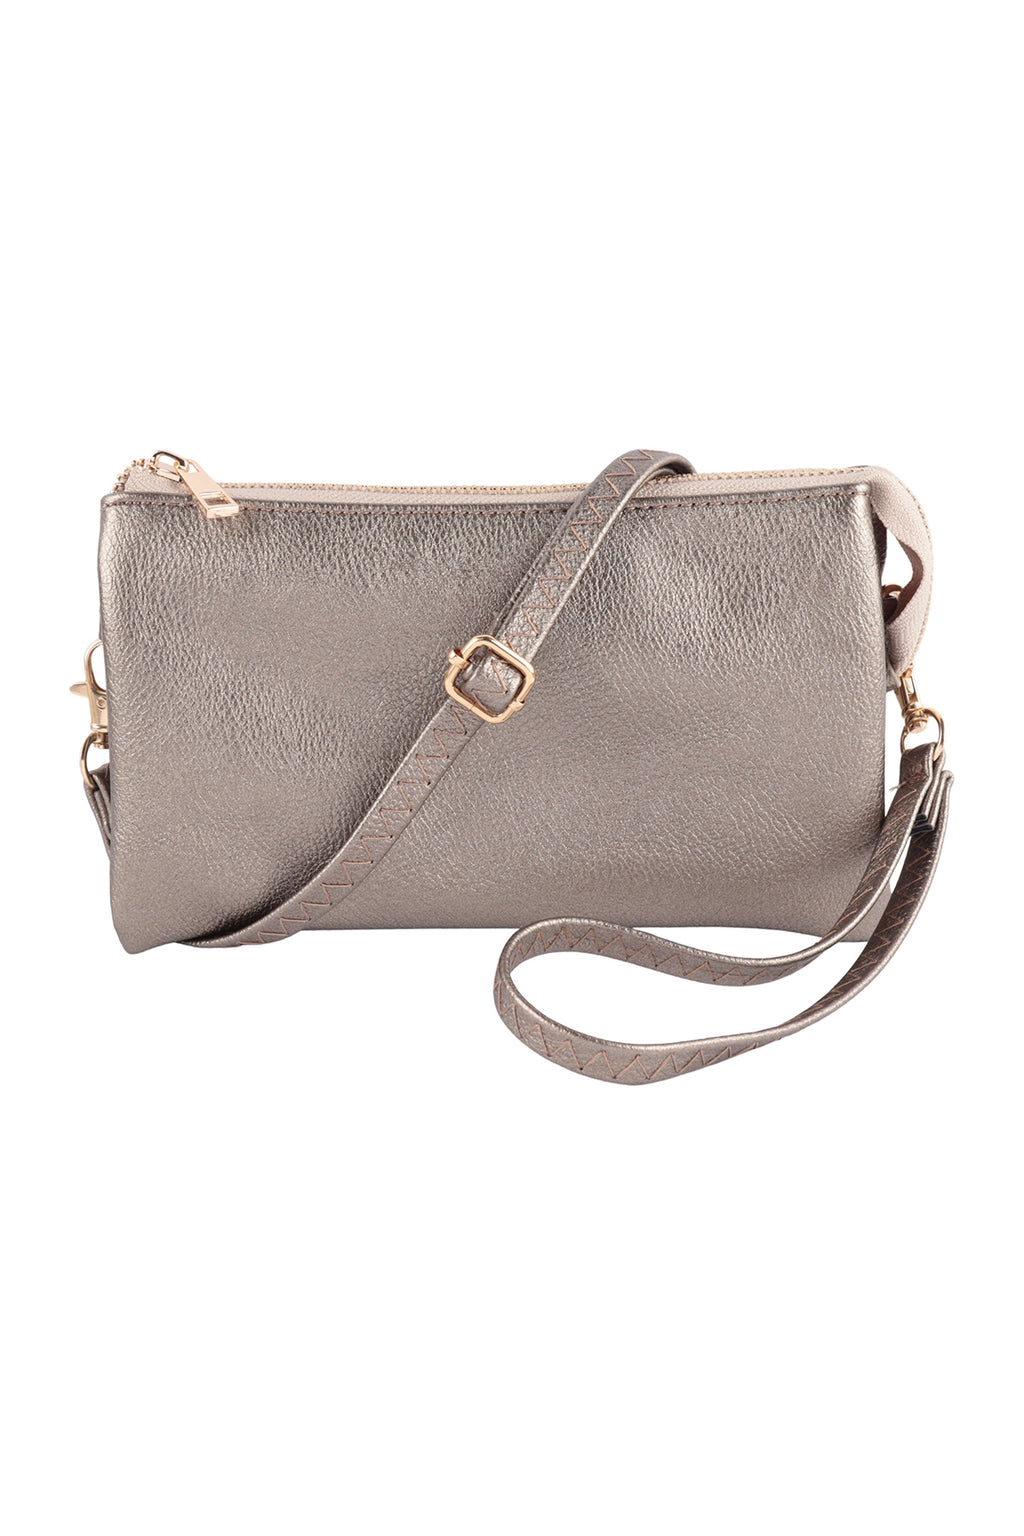 How To Buy Designer Purses Wholesale: A Friendly Guide | Trending handbag,  Fall handbags, Bags